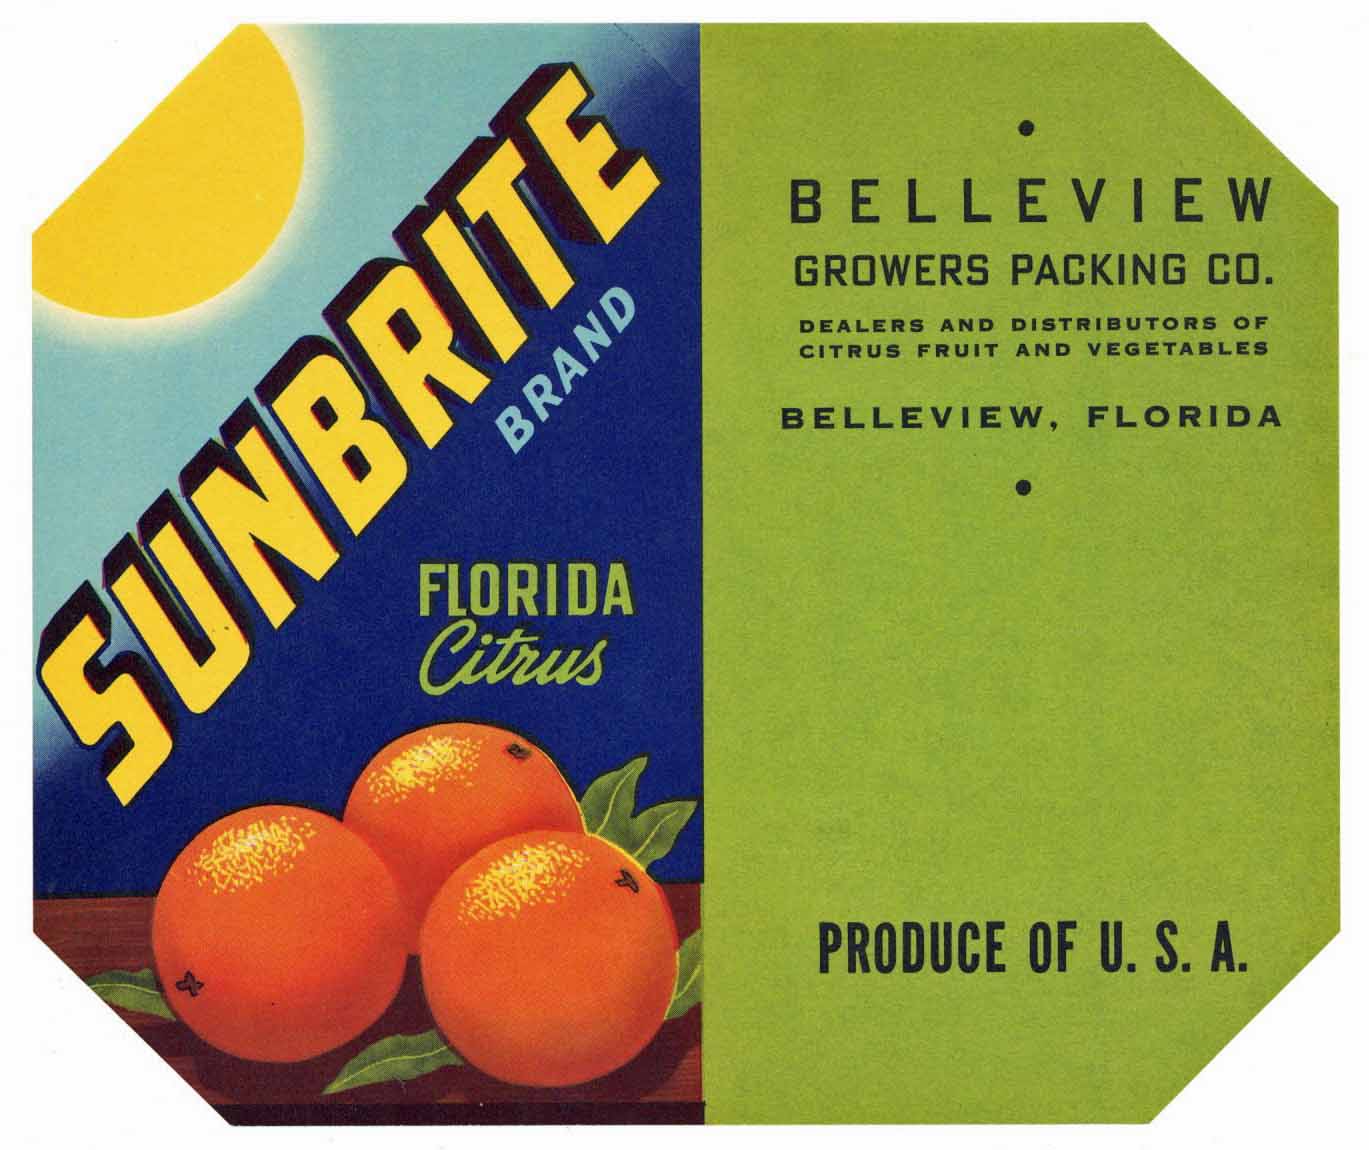 Sunbrite Brand Vintage Belleview Florida Citrus Crate Label, square